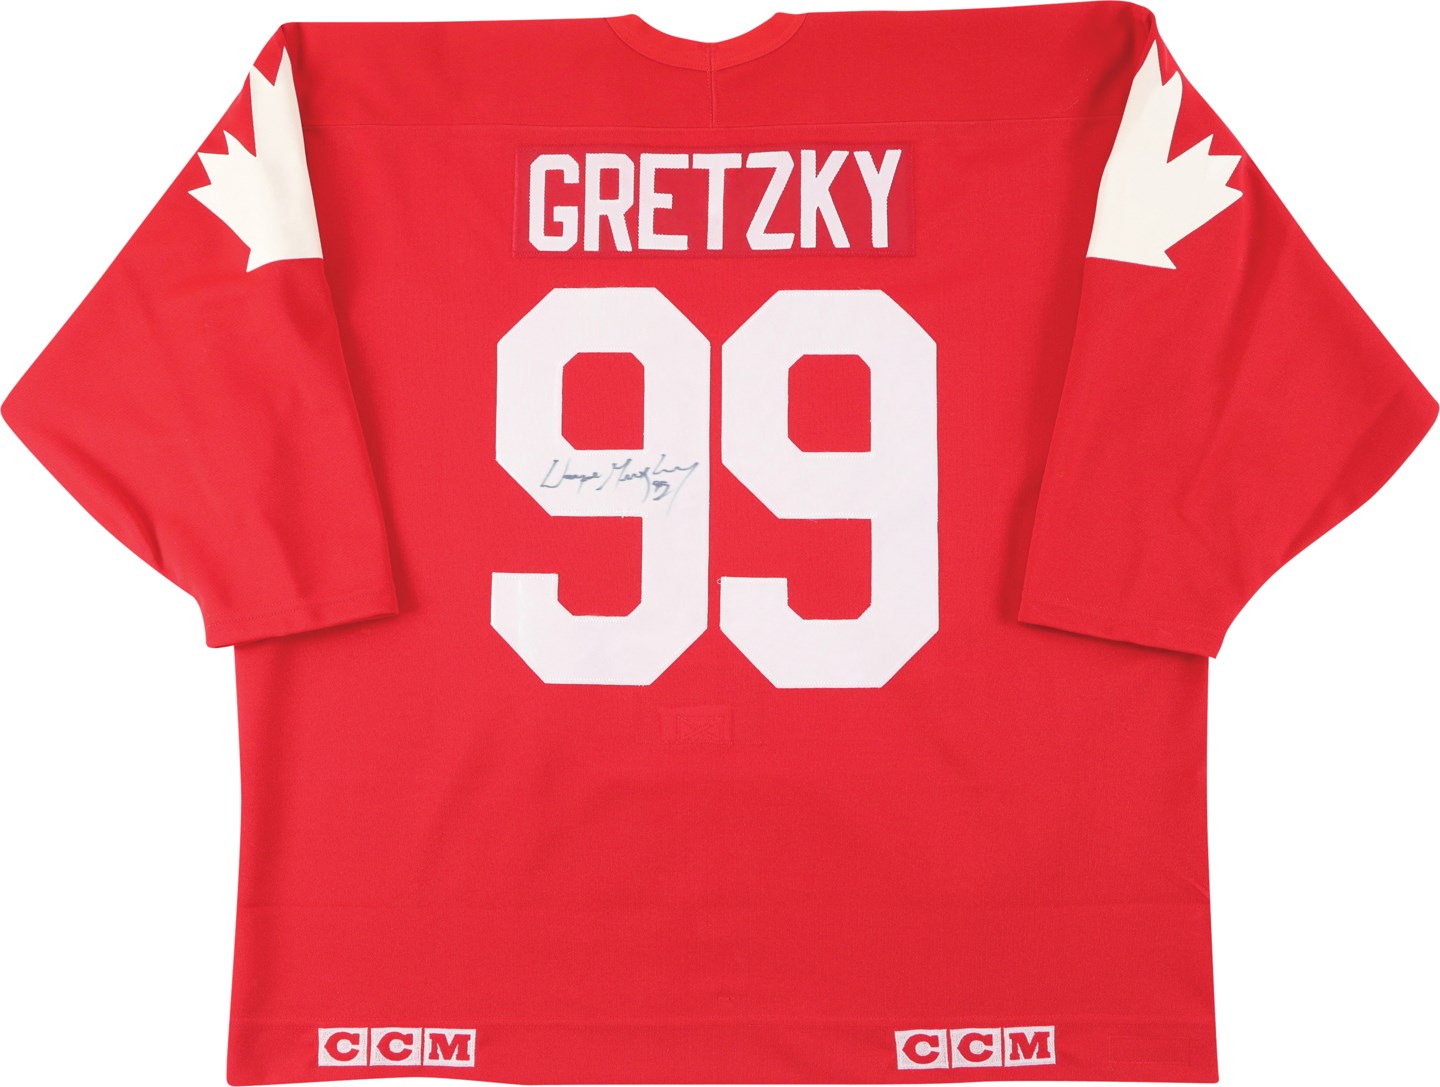 Hockey - Wayne Gretzky Team Canada Signed Jersey (PSA)